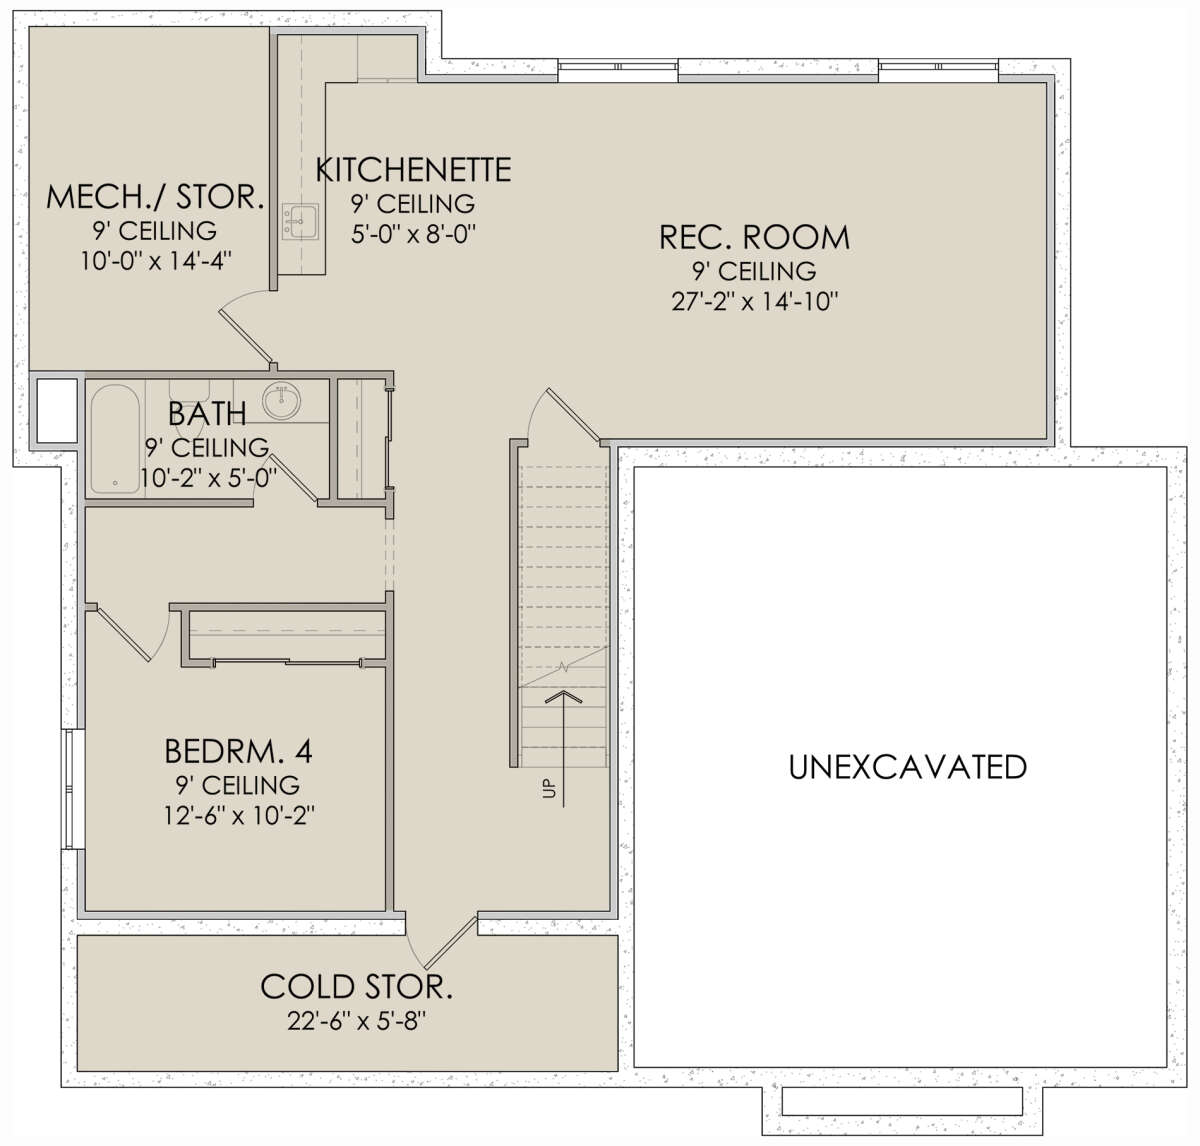 Craftsman Plan: 2,465 Square Feet, 3 Bedrooms, 2.5 Bathrooms - 009-00069